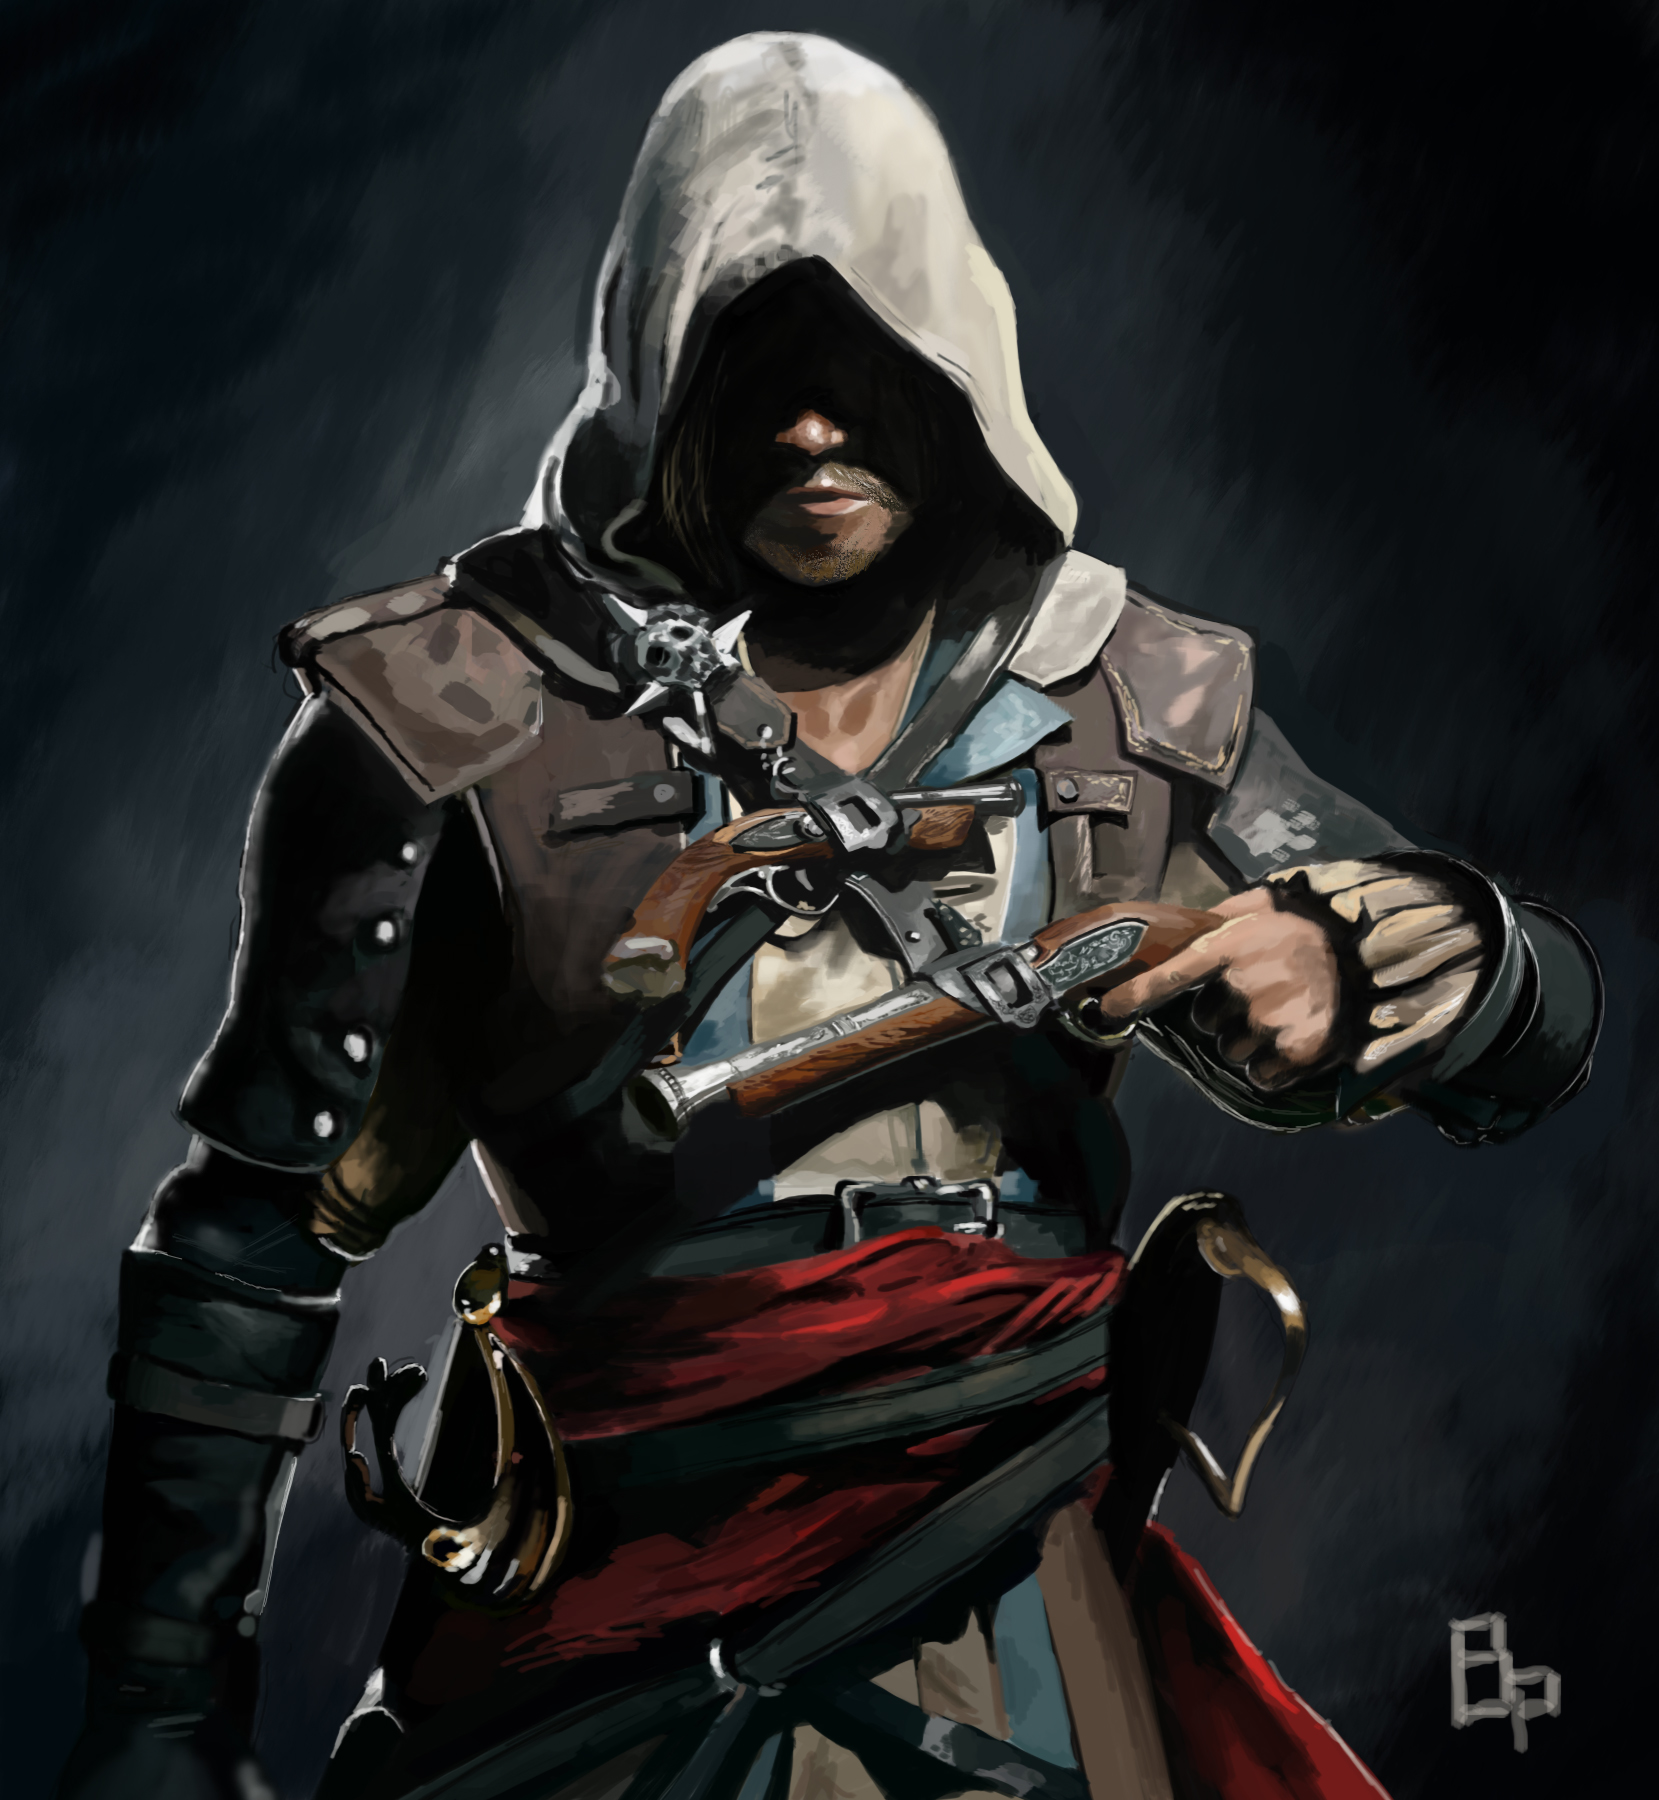 Assassin's Creed Black Flag - Edward Kenway by IvanCEs on DeviantArt